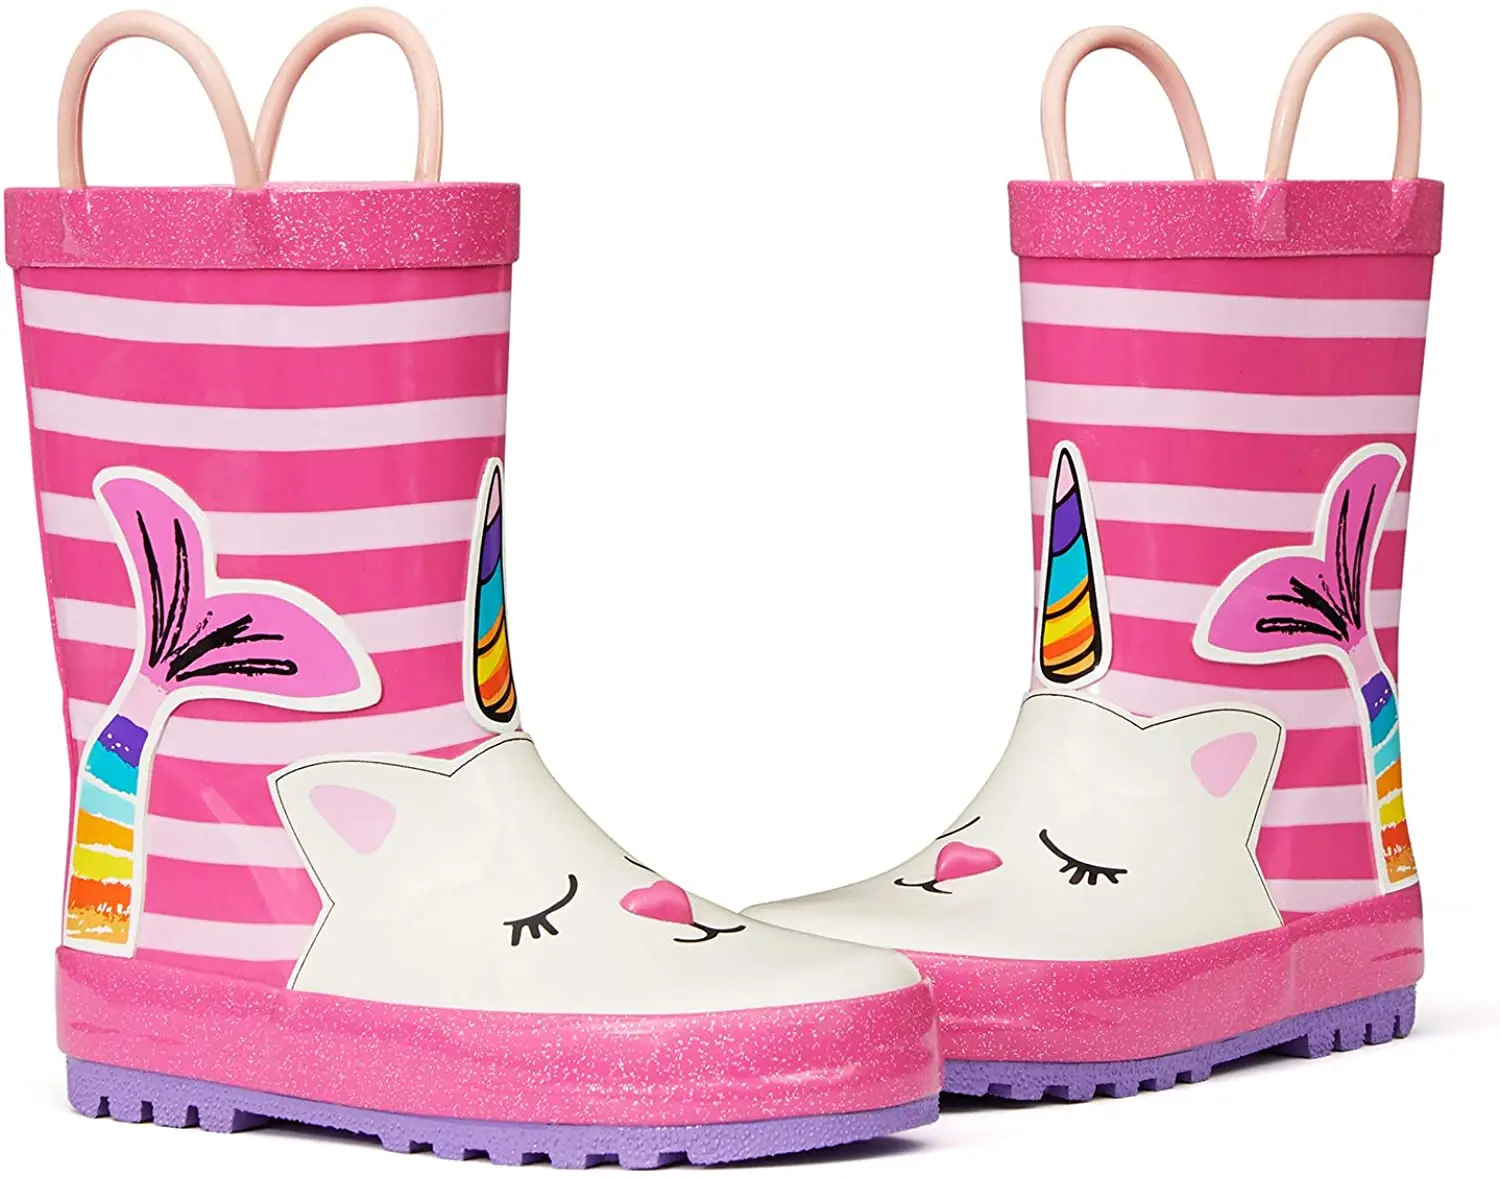 Unicorn Rubber Outdoor Waterproof Rain Boots